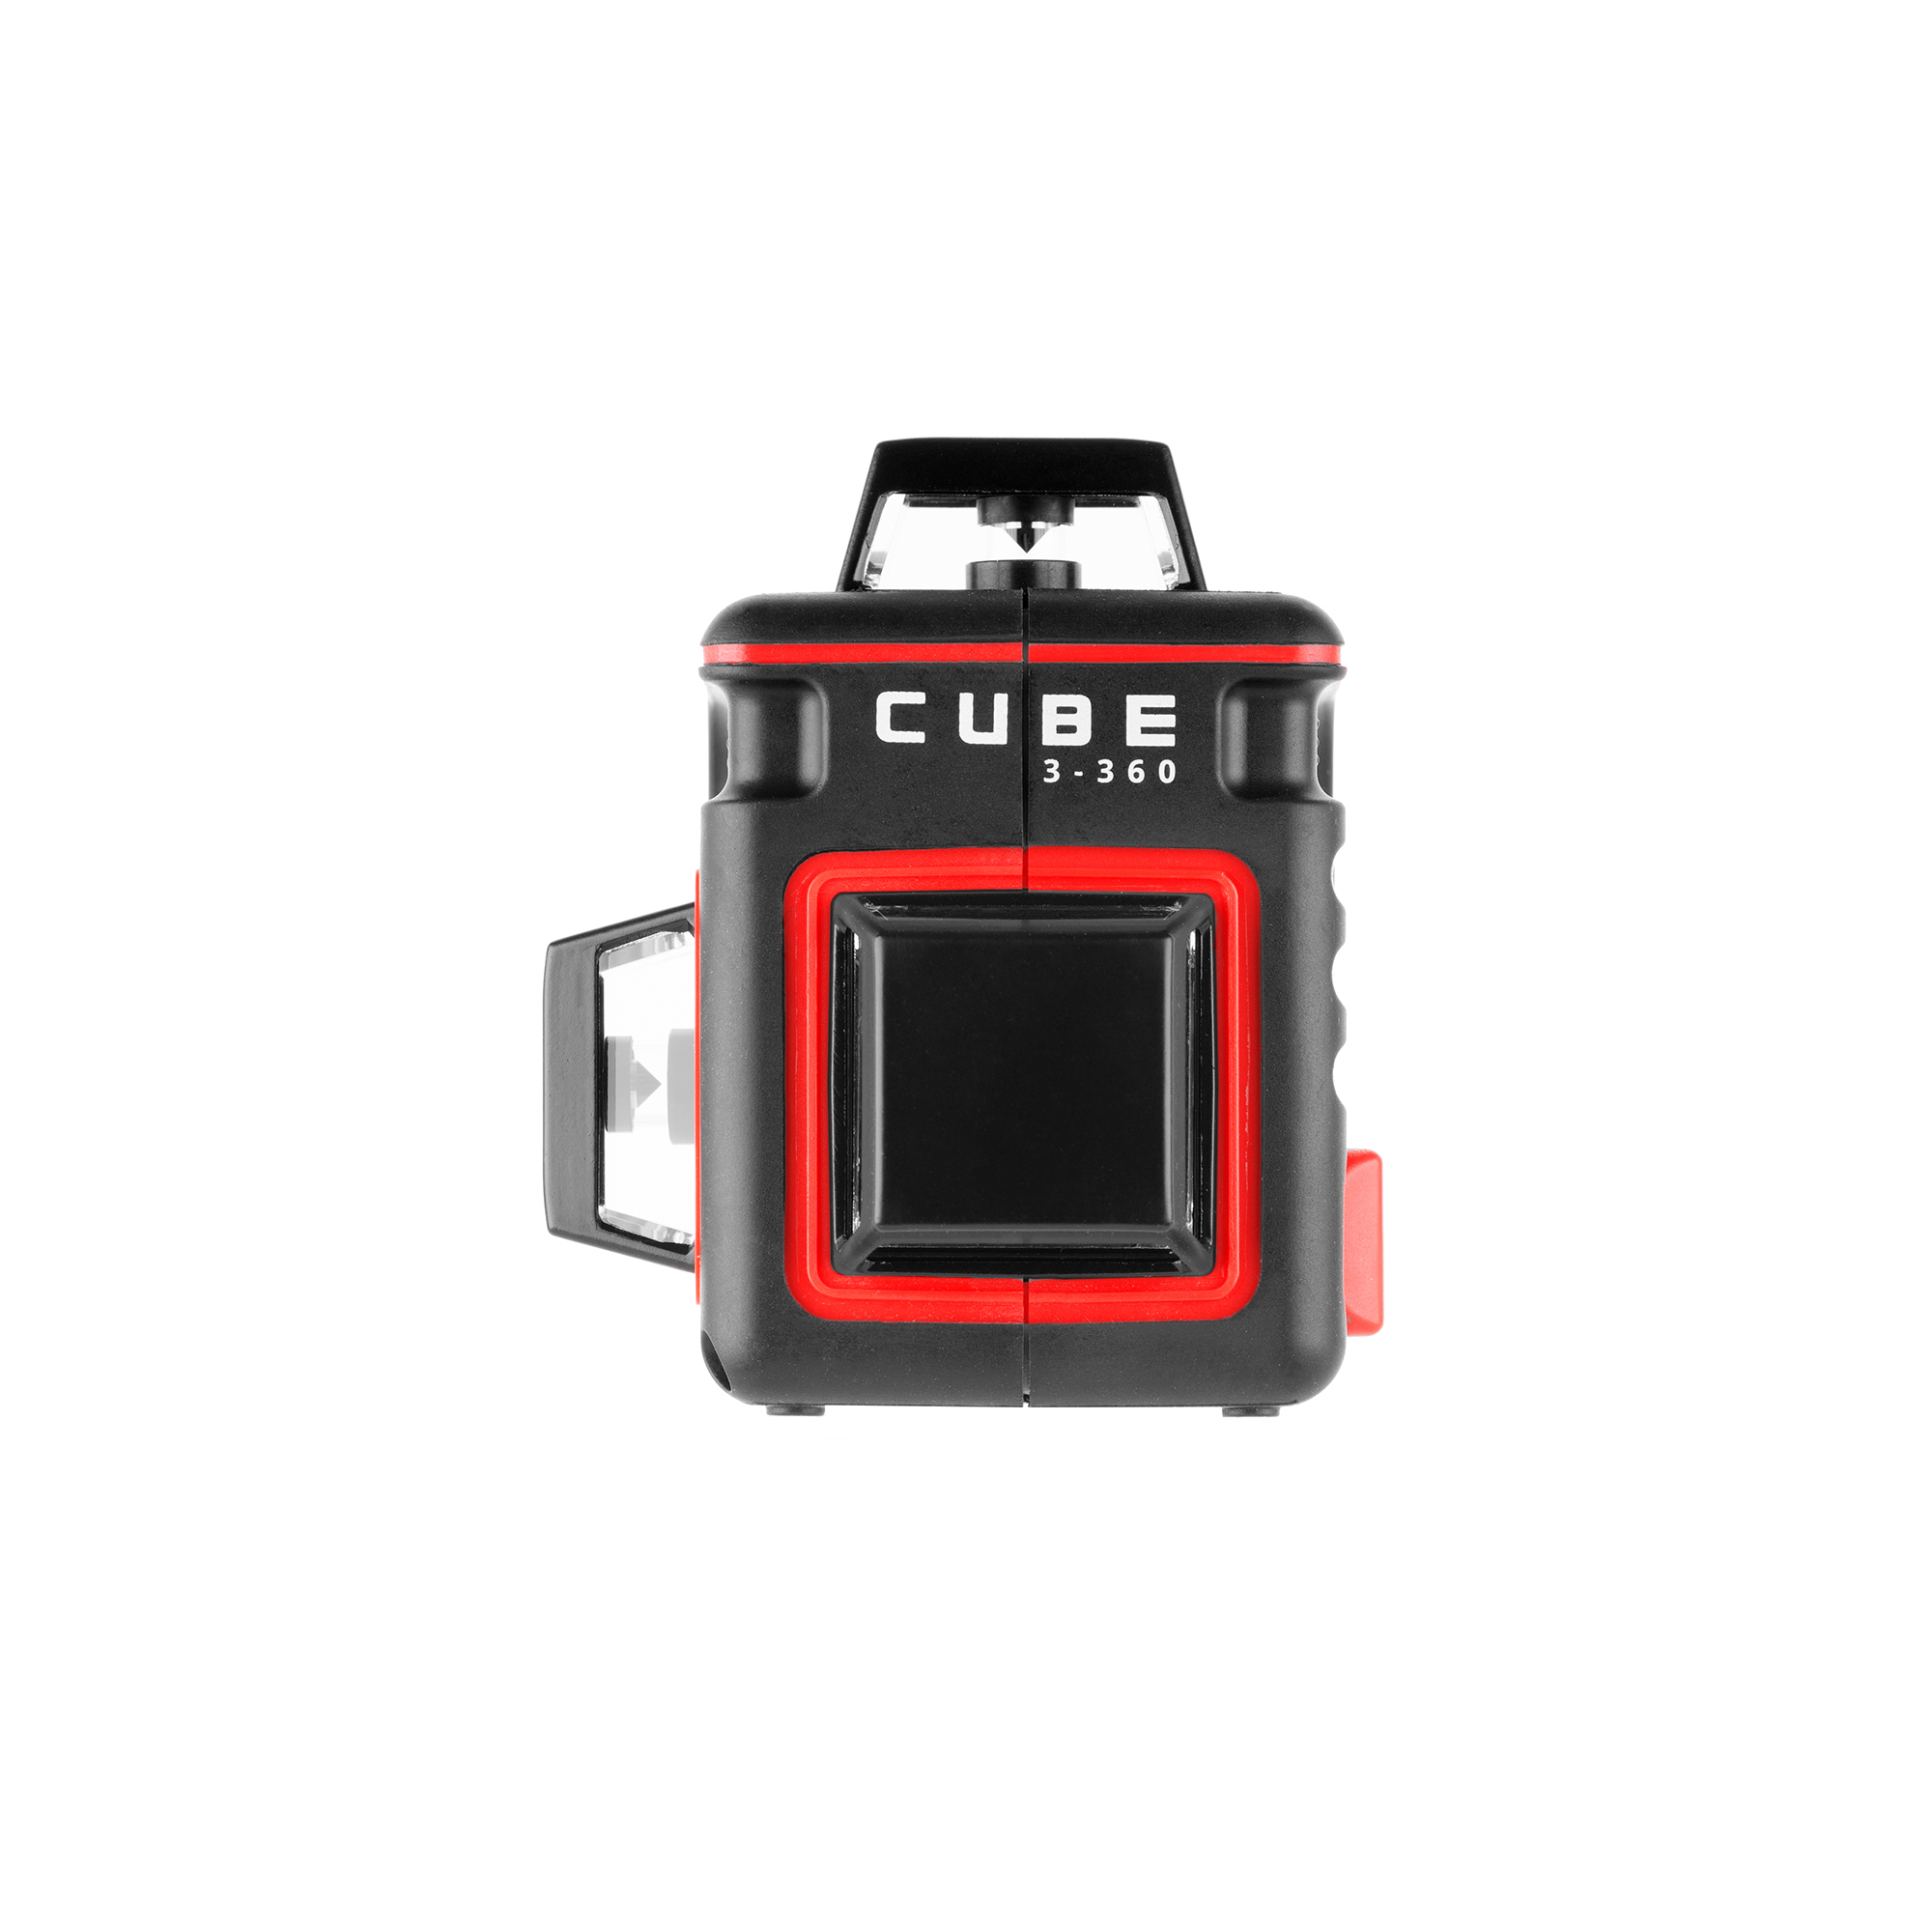 Ada cube 360 basic edition